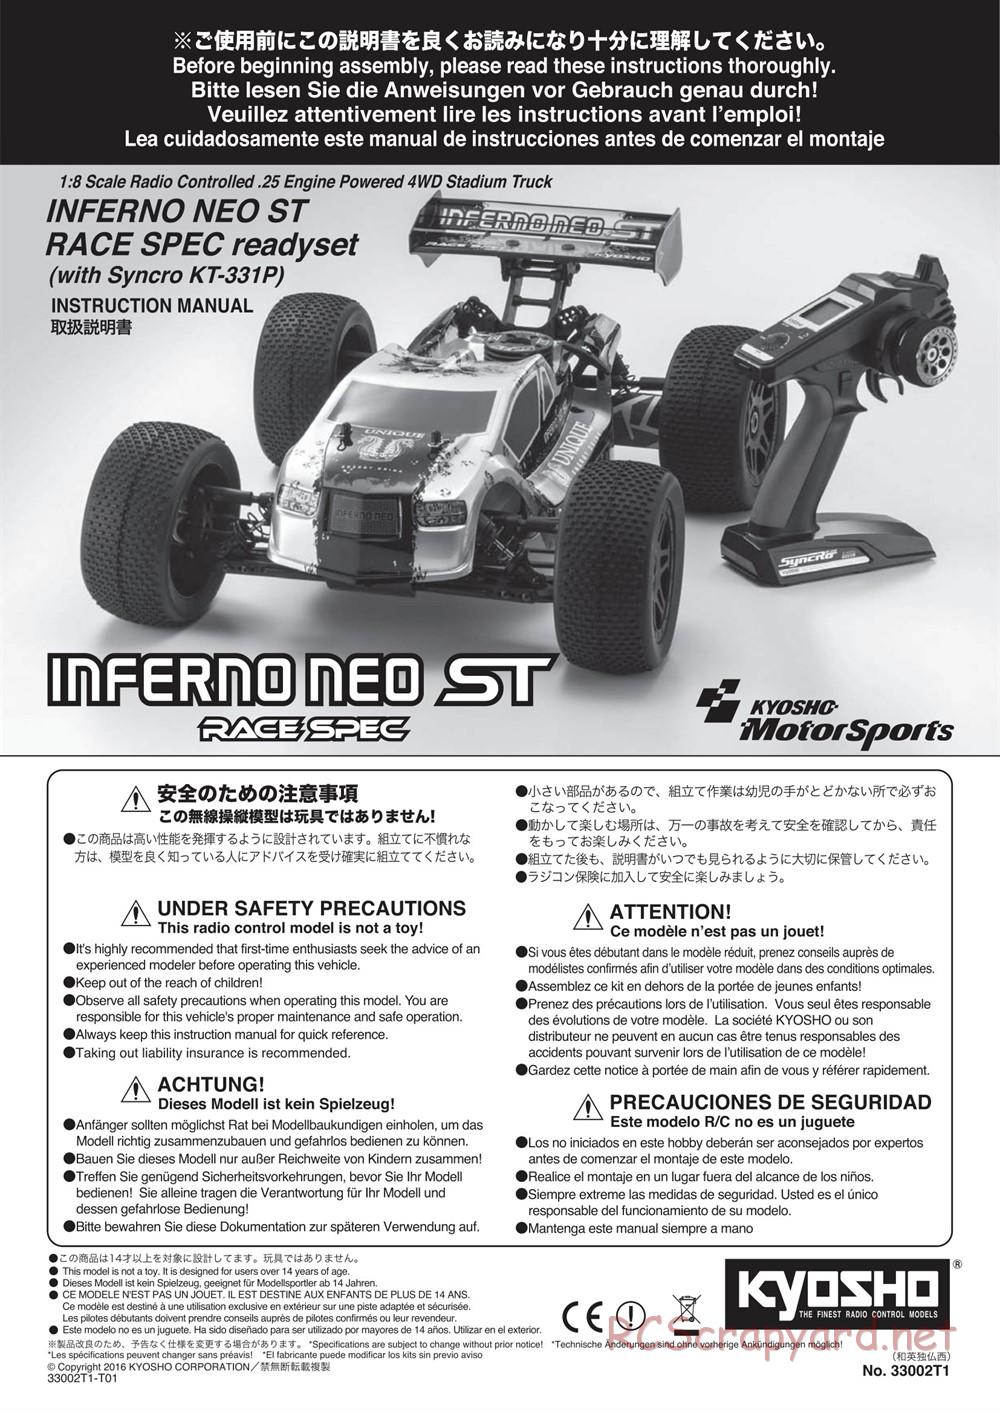 Kyosho - Inferno NEO ST Race Spec - Manual - Page 1